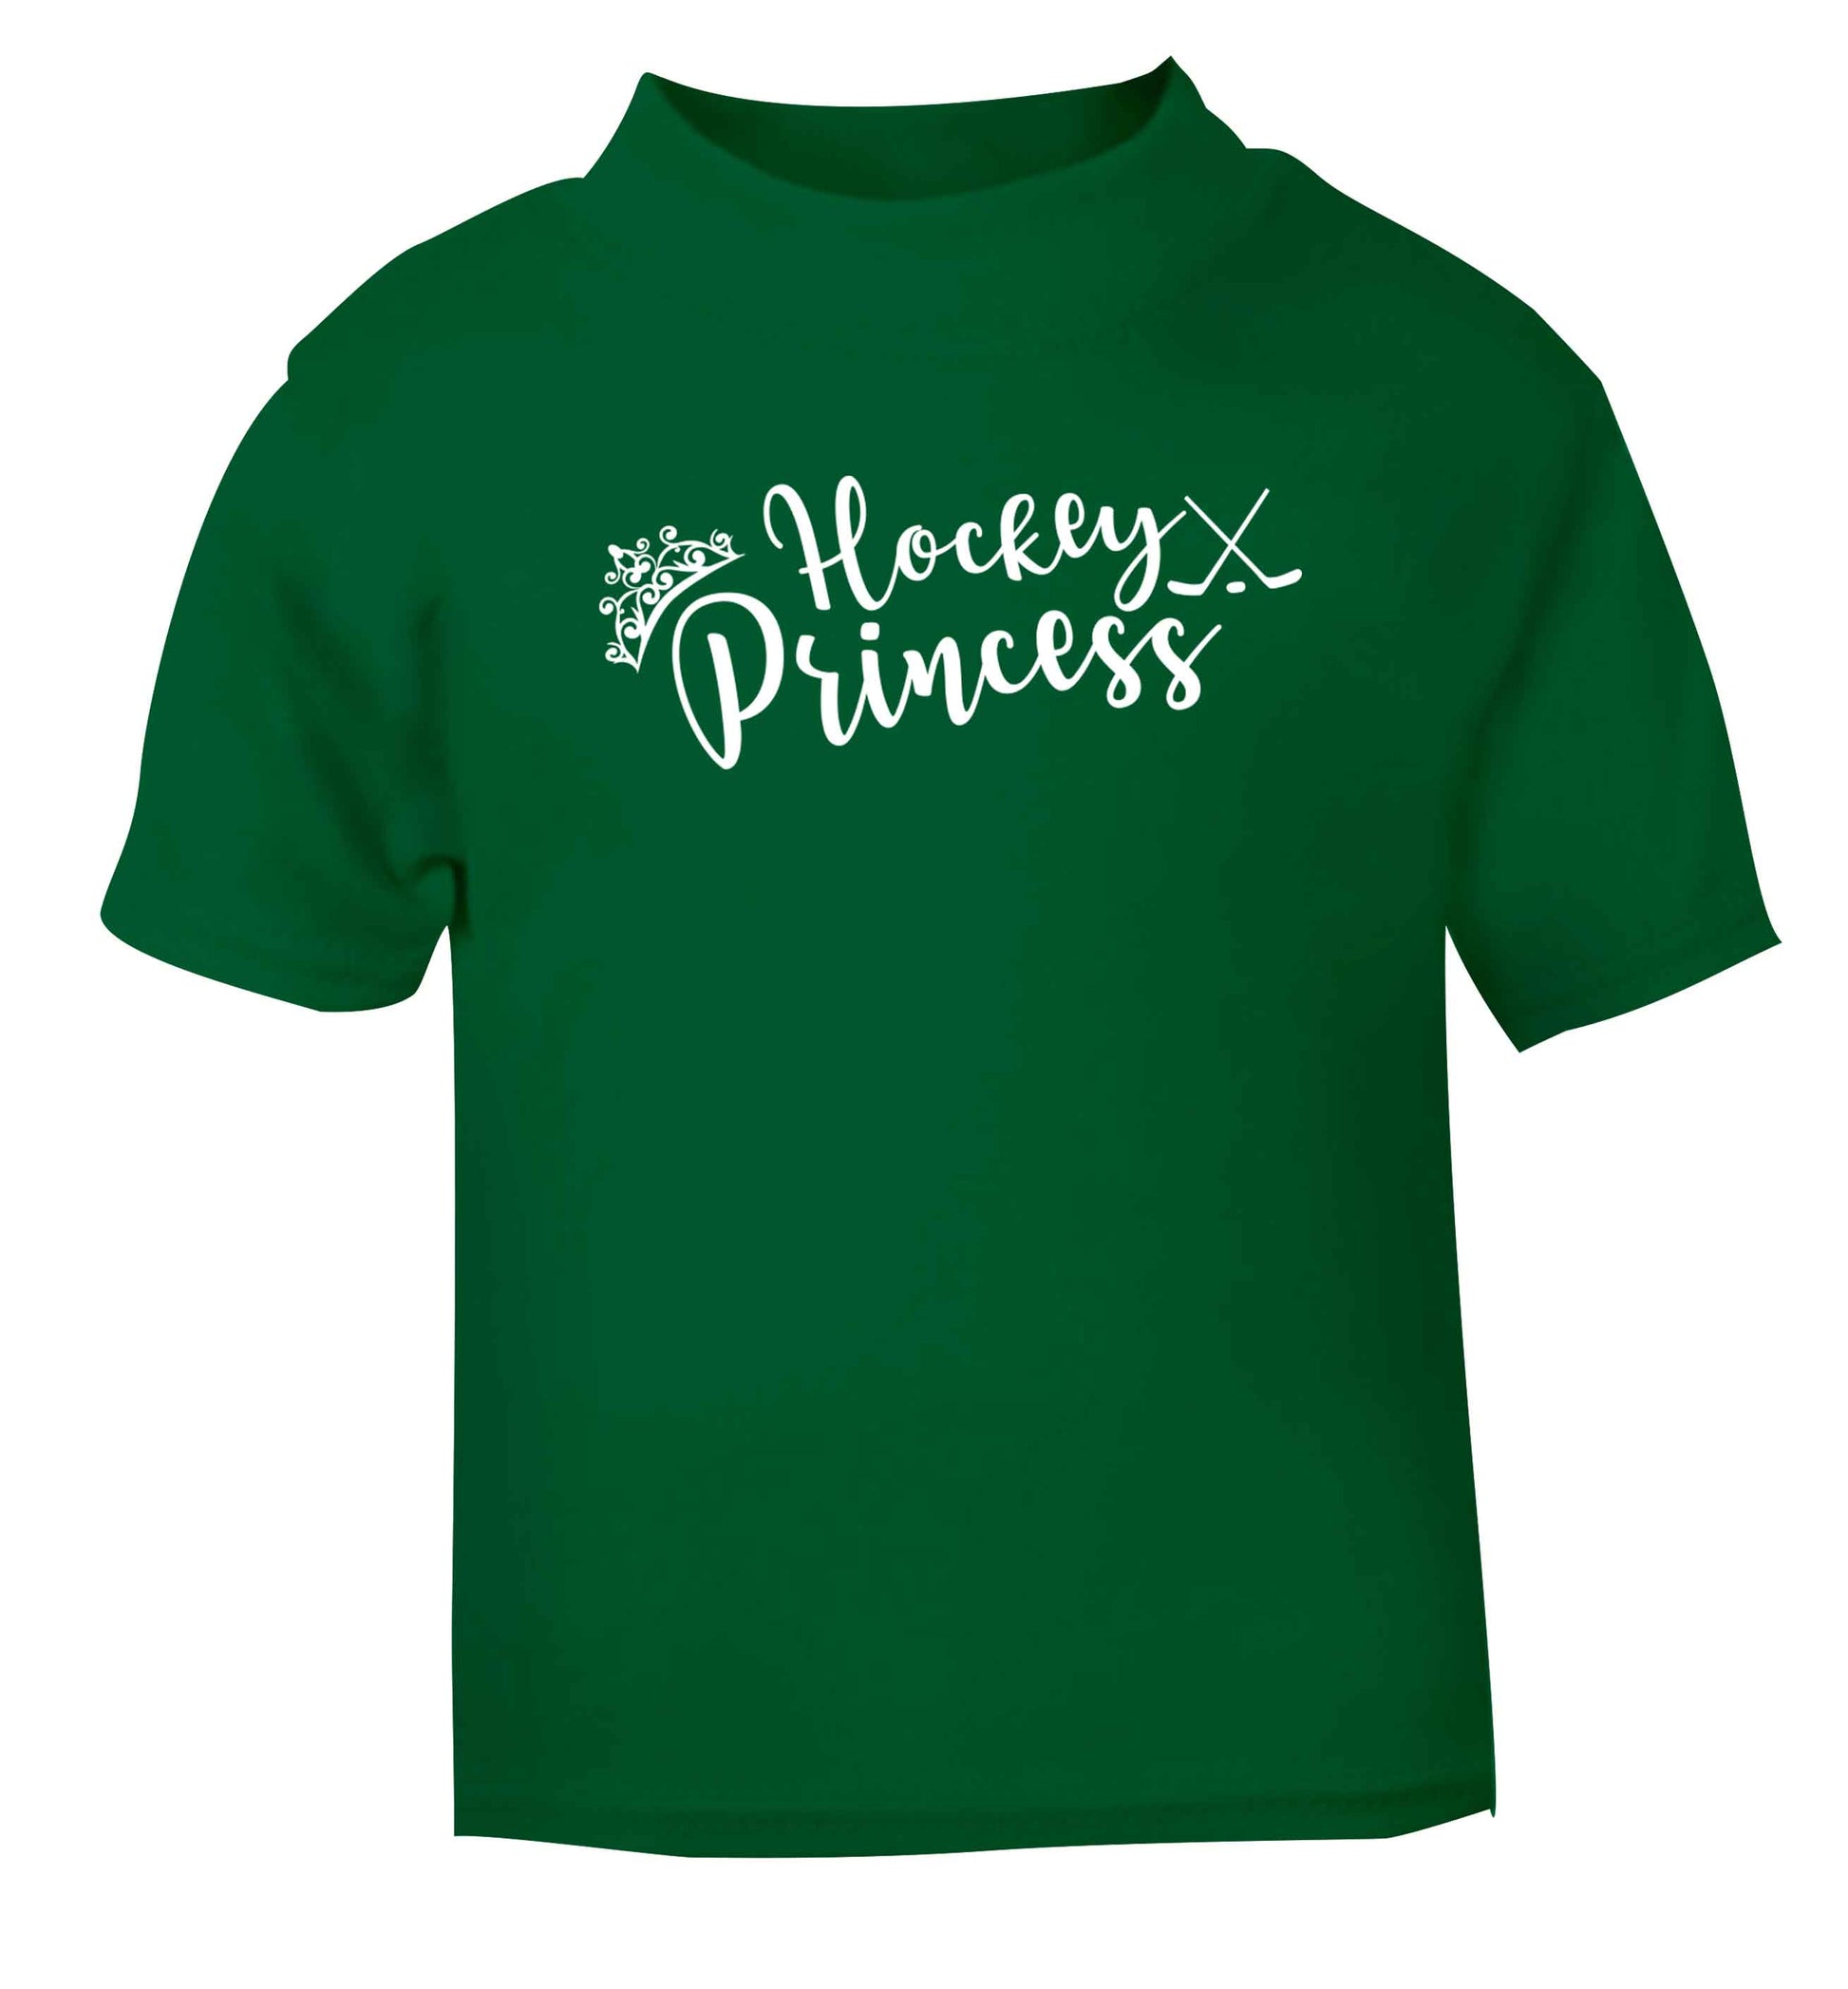 Hockey princess green Baby Toddler Tshirt 2 Years